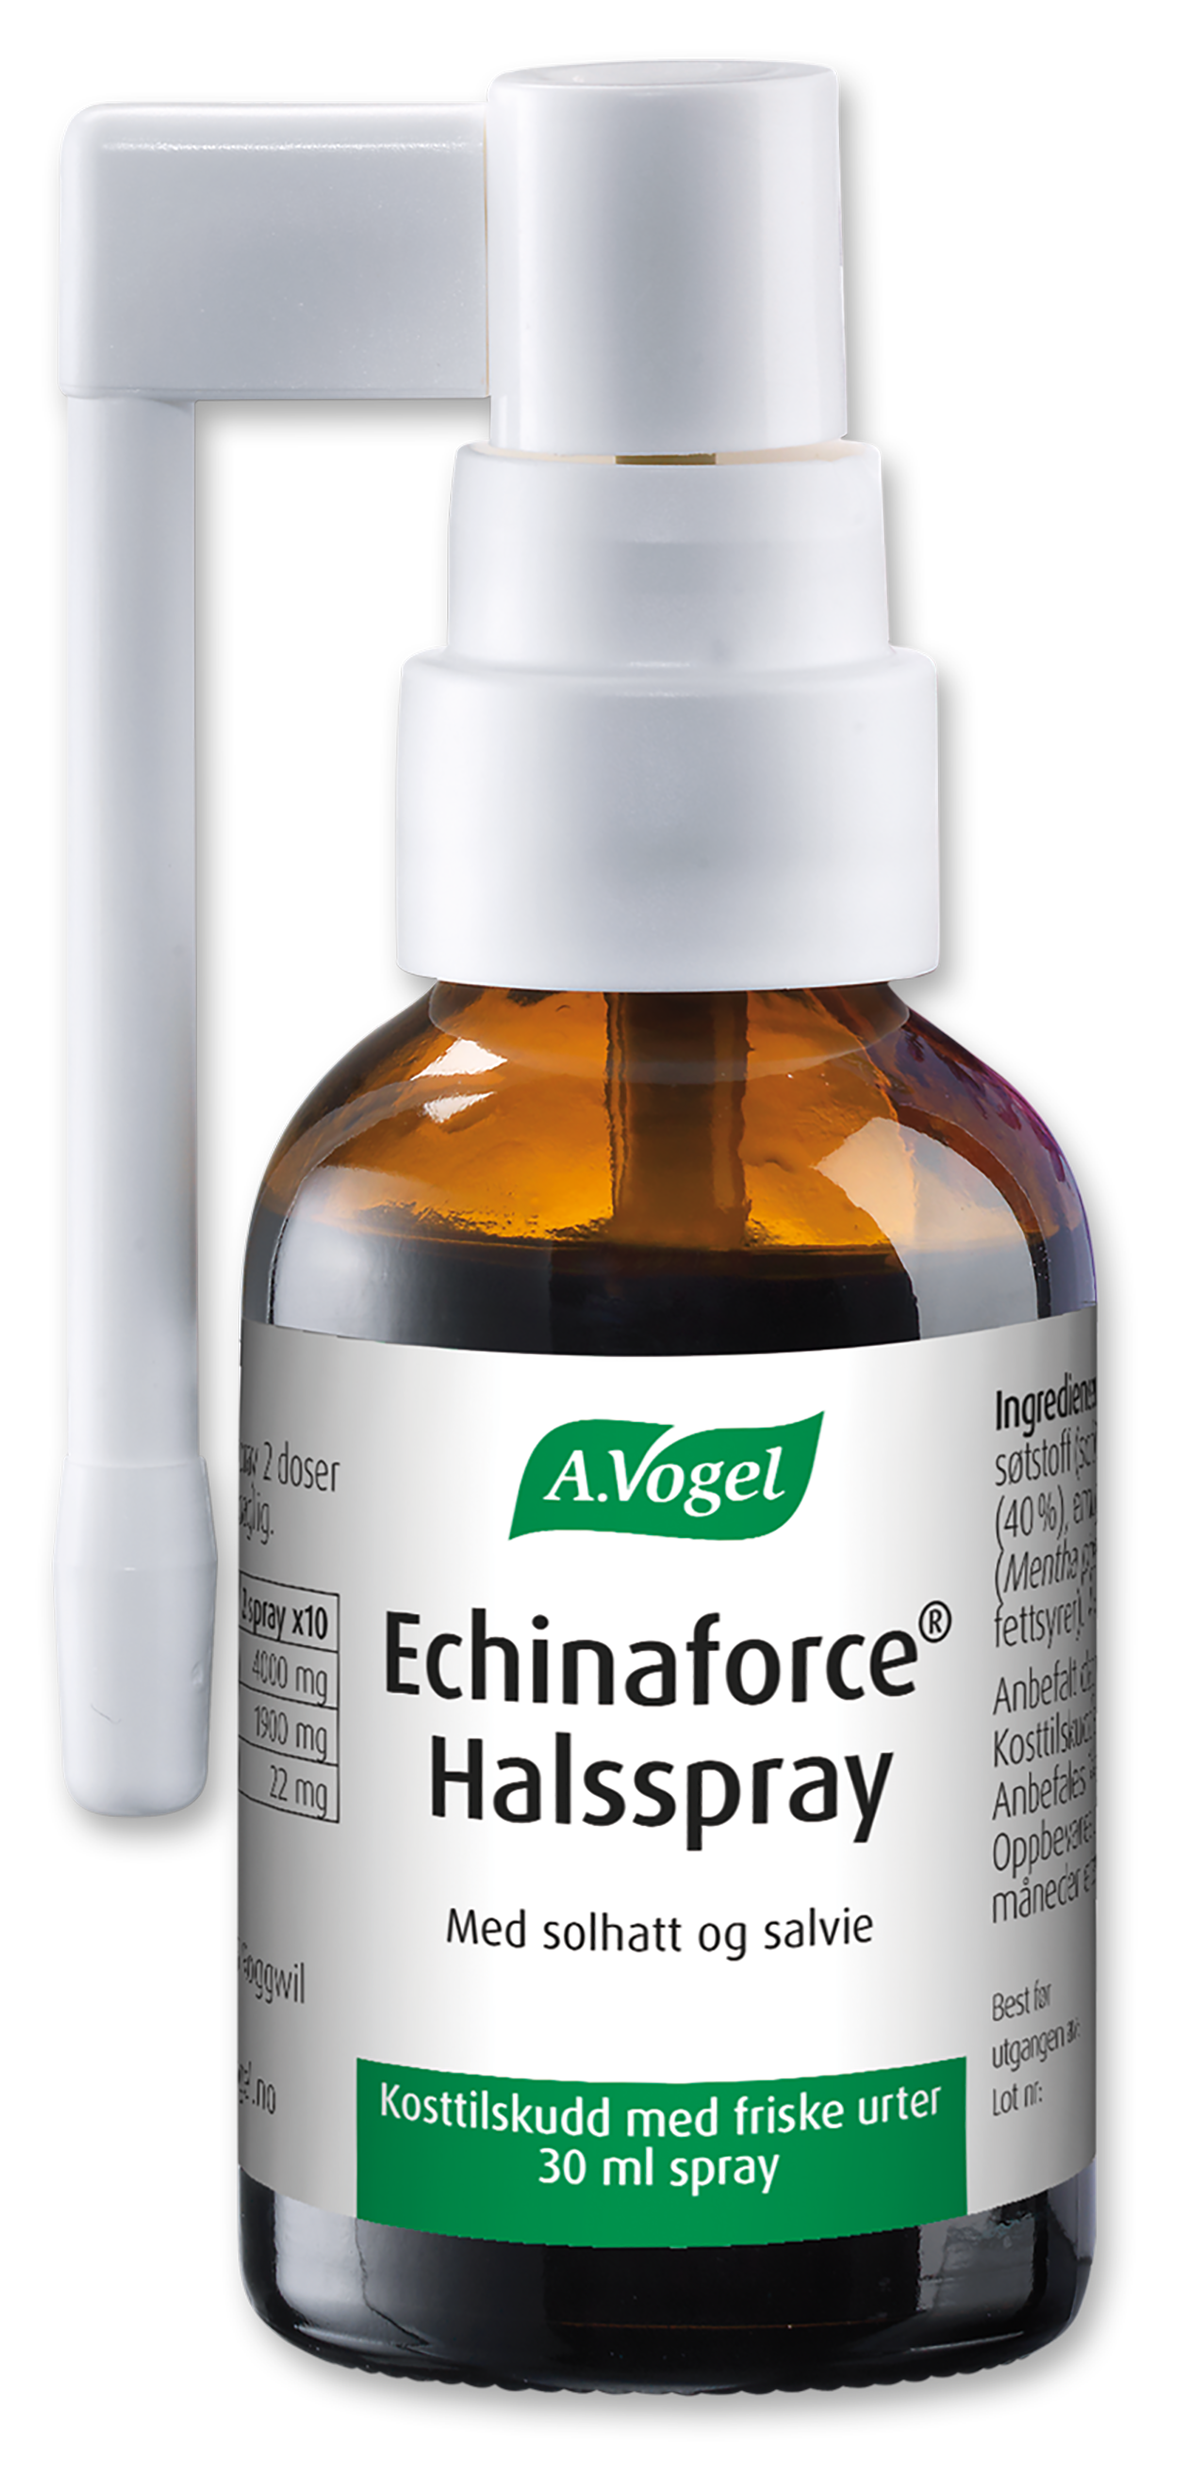 Echinaforce ® Halsspray 